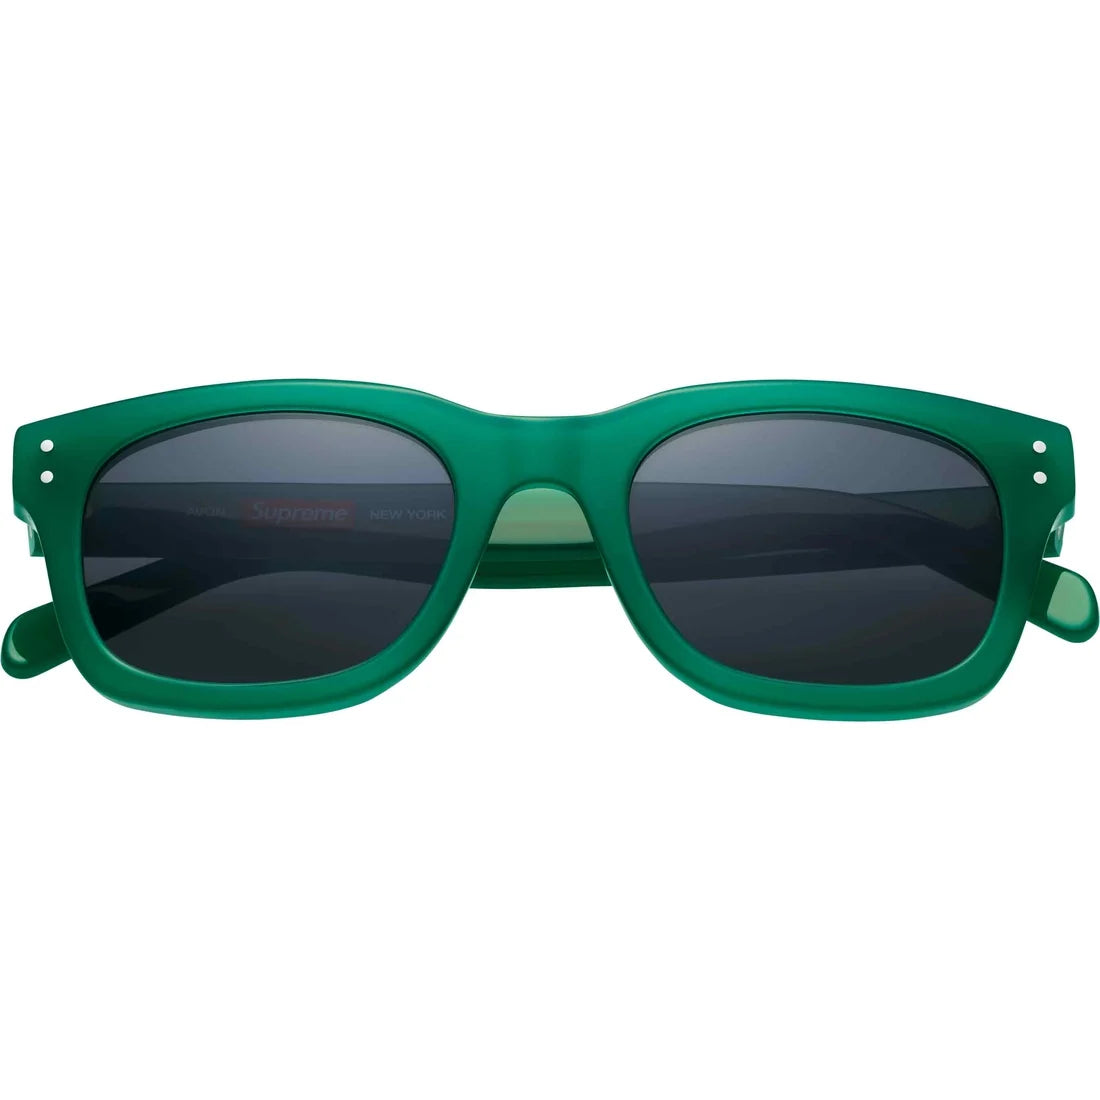 Supreme Avon Sunglasses Green